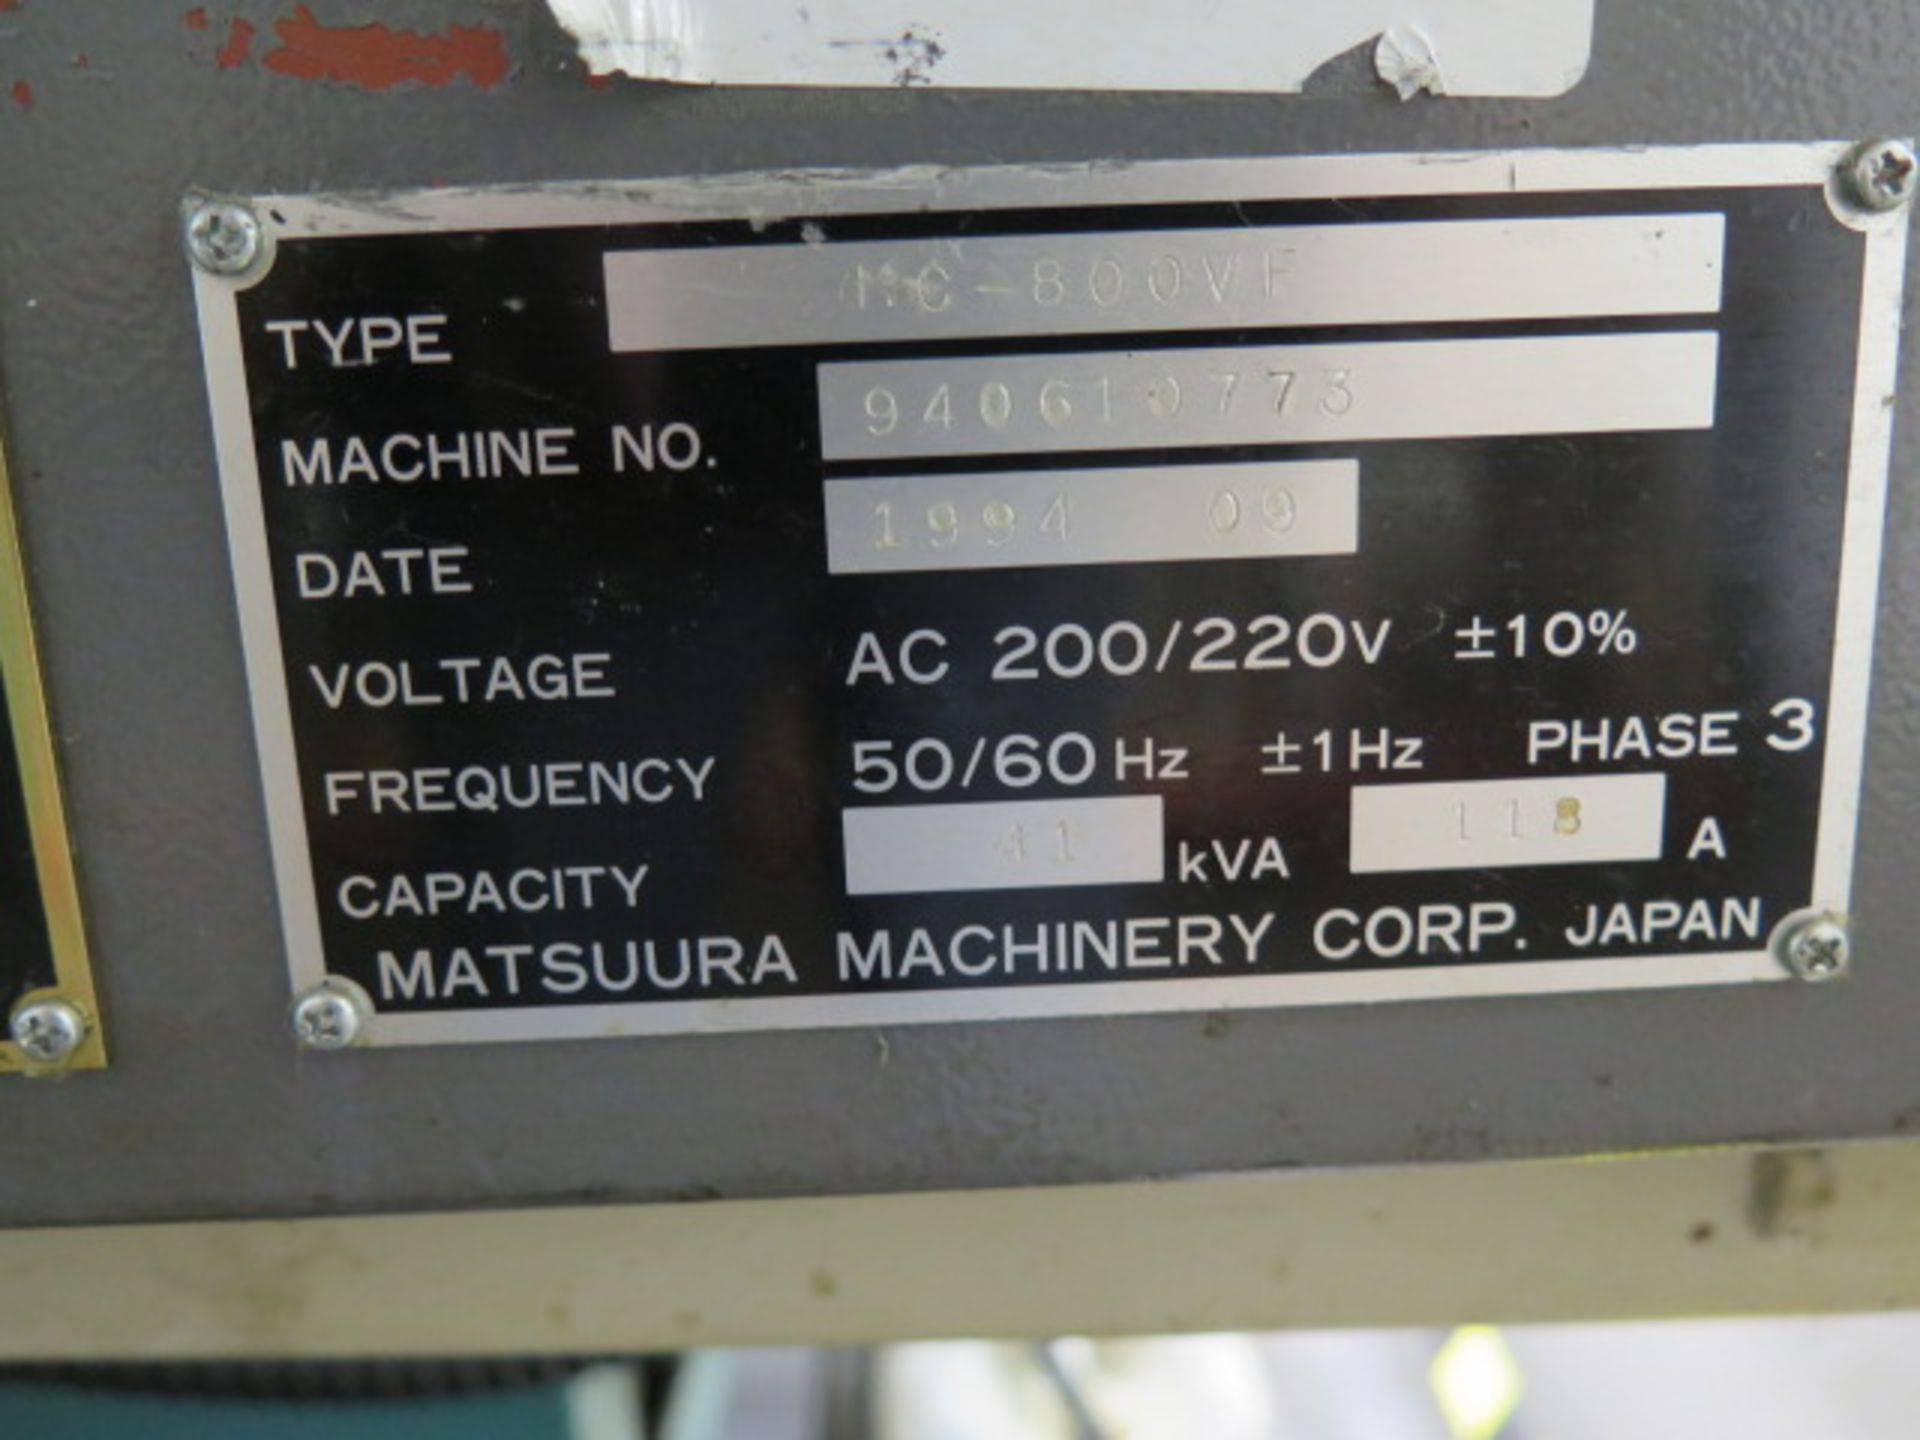 1994 Matsuura MC-800VF CNC Vertical Machining Center s/n 940610773 w/ Yasnac Controls, 30-Station A - Image 18 of 18